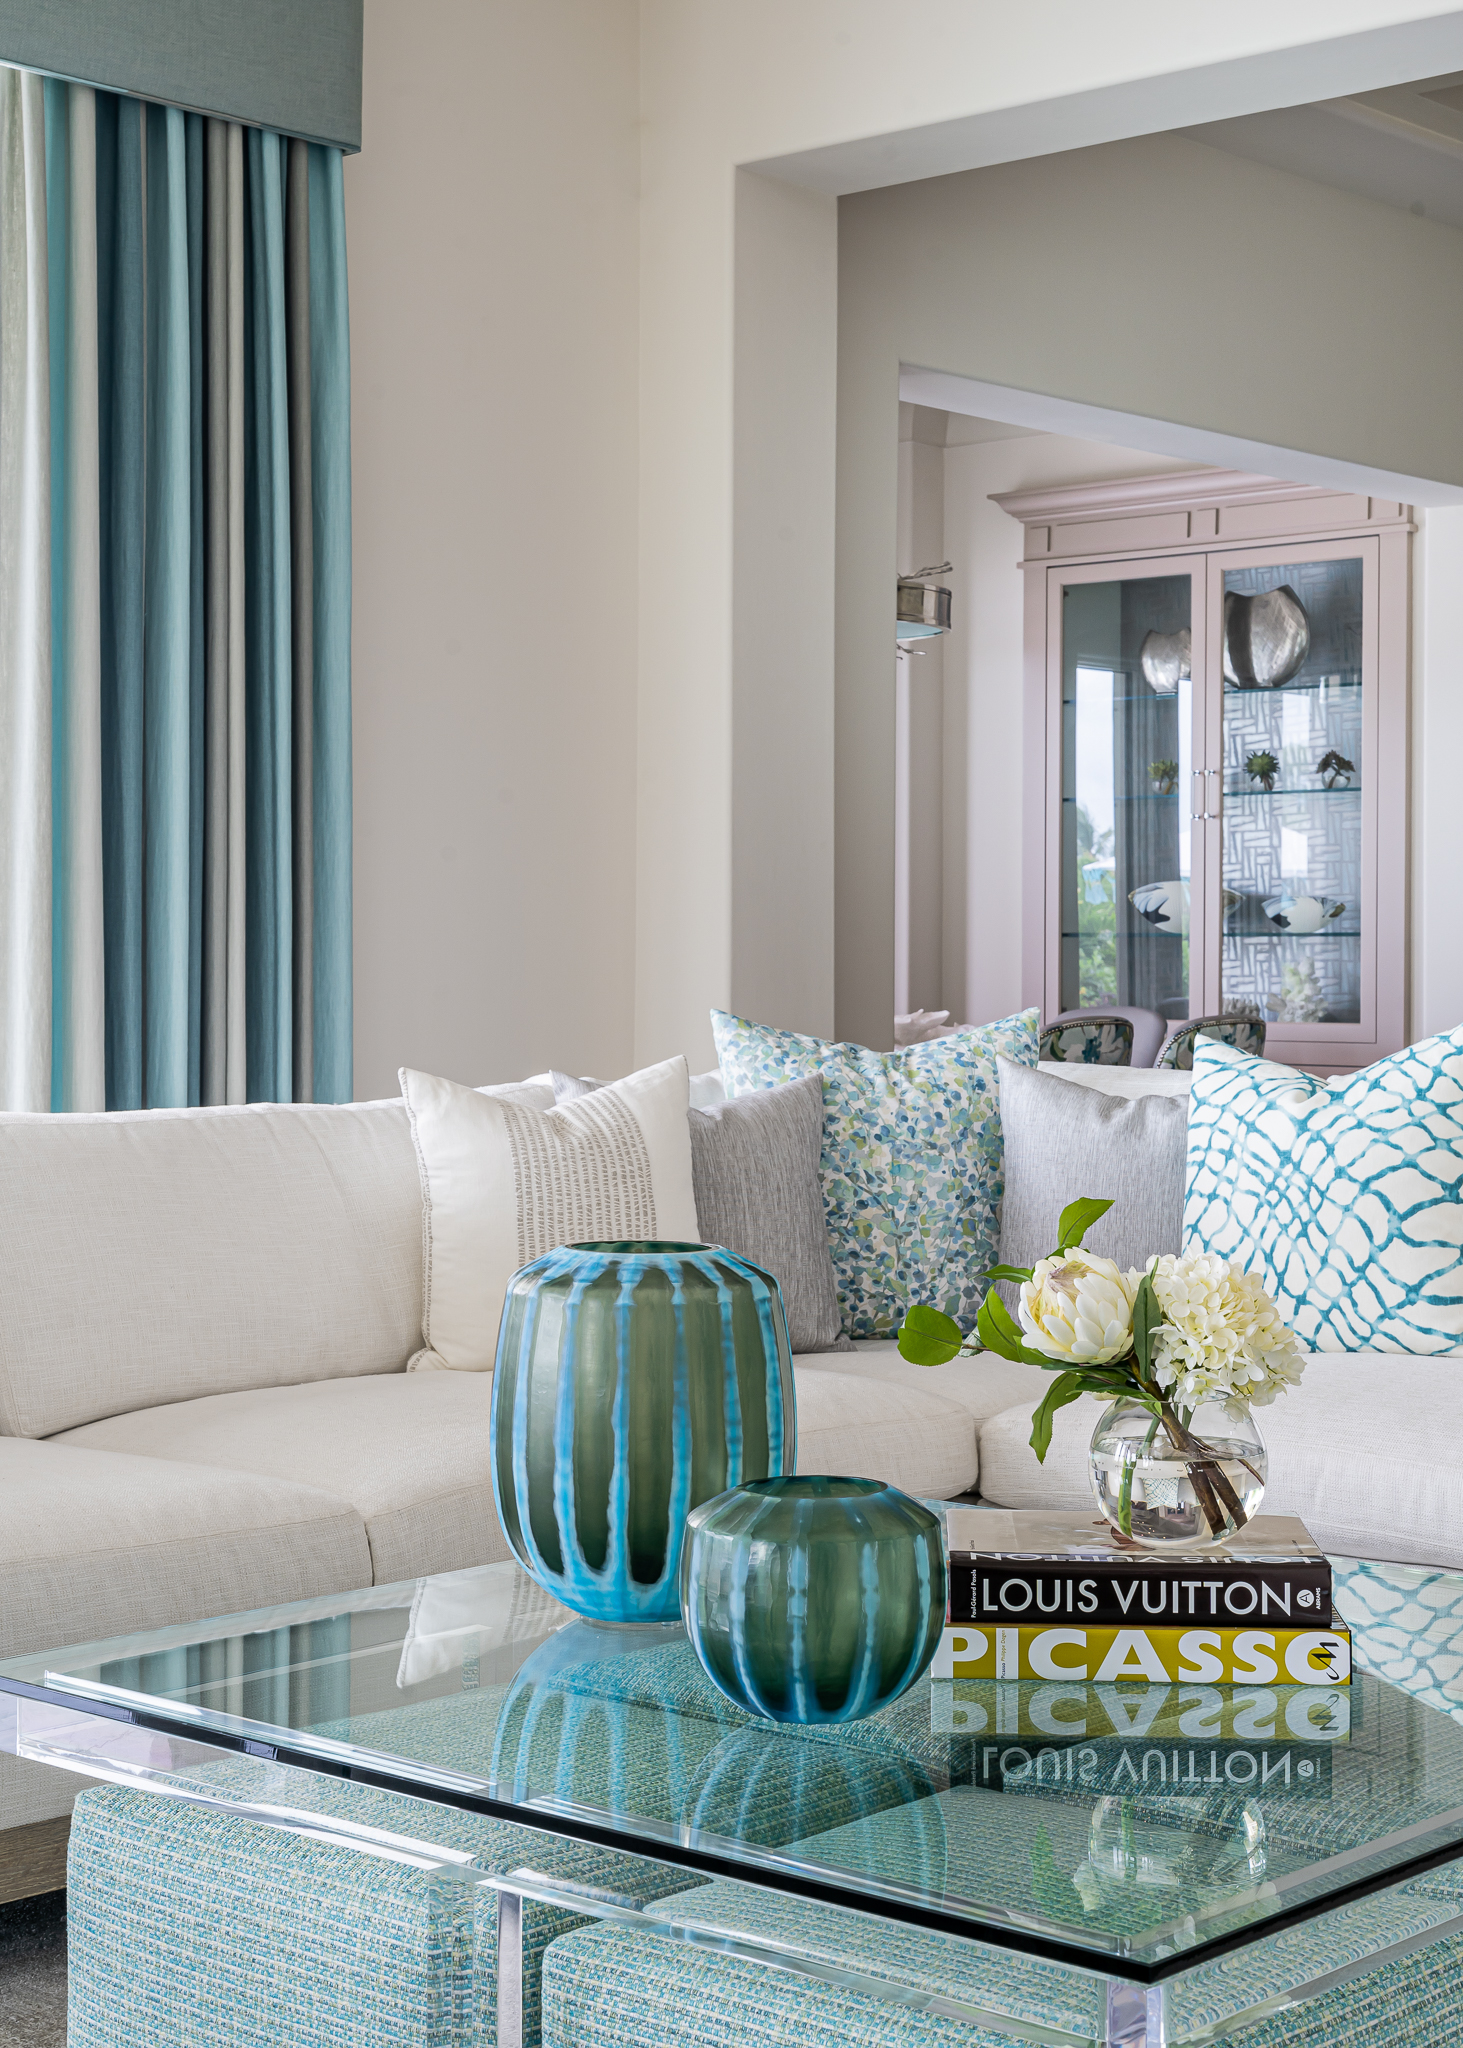 A coastal contemporary home office design with a blush neutral palette, designed by Florida interior designer Brooke Meyer of Gulfshore Interior Design